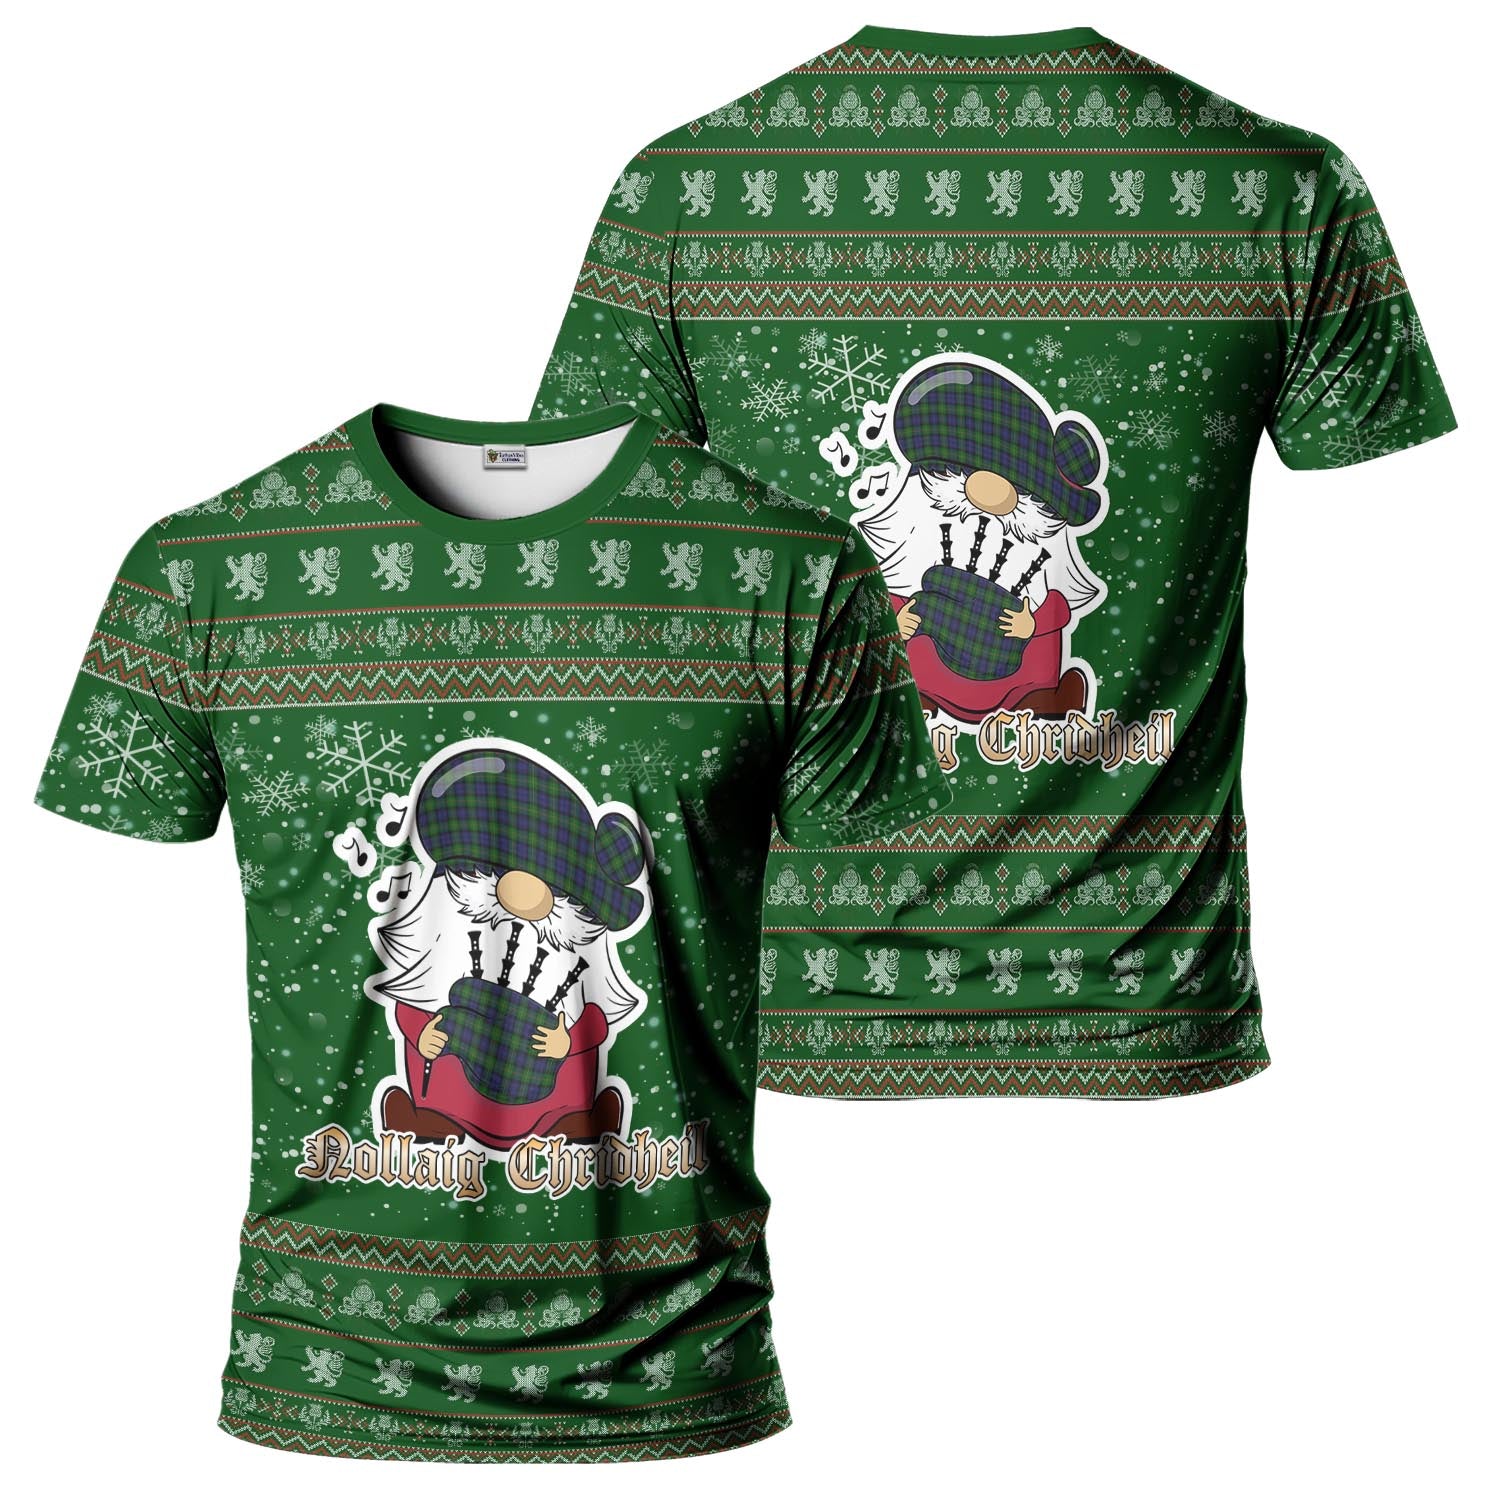 Gordon Clan Christmas Family T-Shirt with Funny Gnome Playing Bagpipes Men's Shirt Green - Tartanvibesclothing